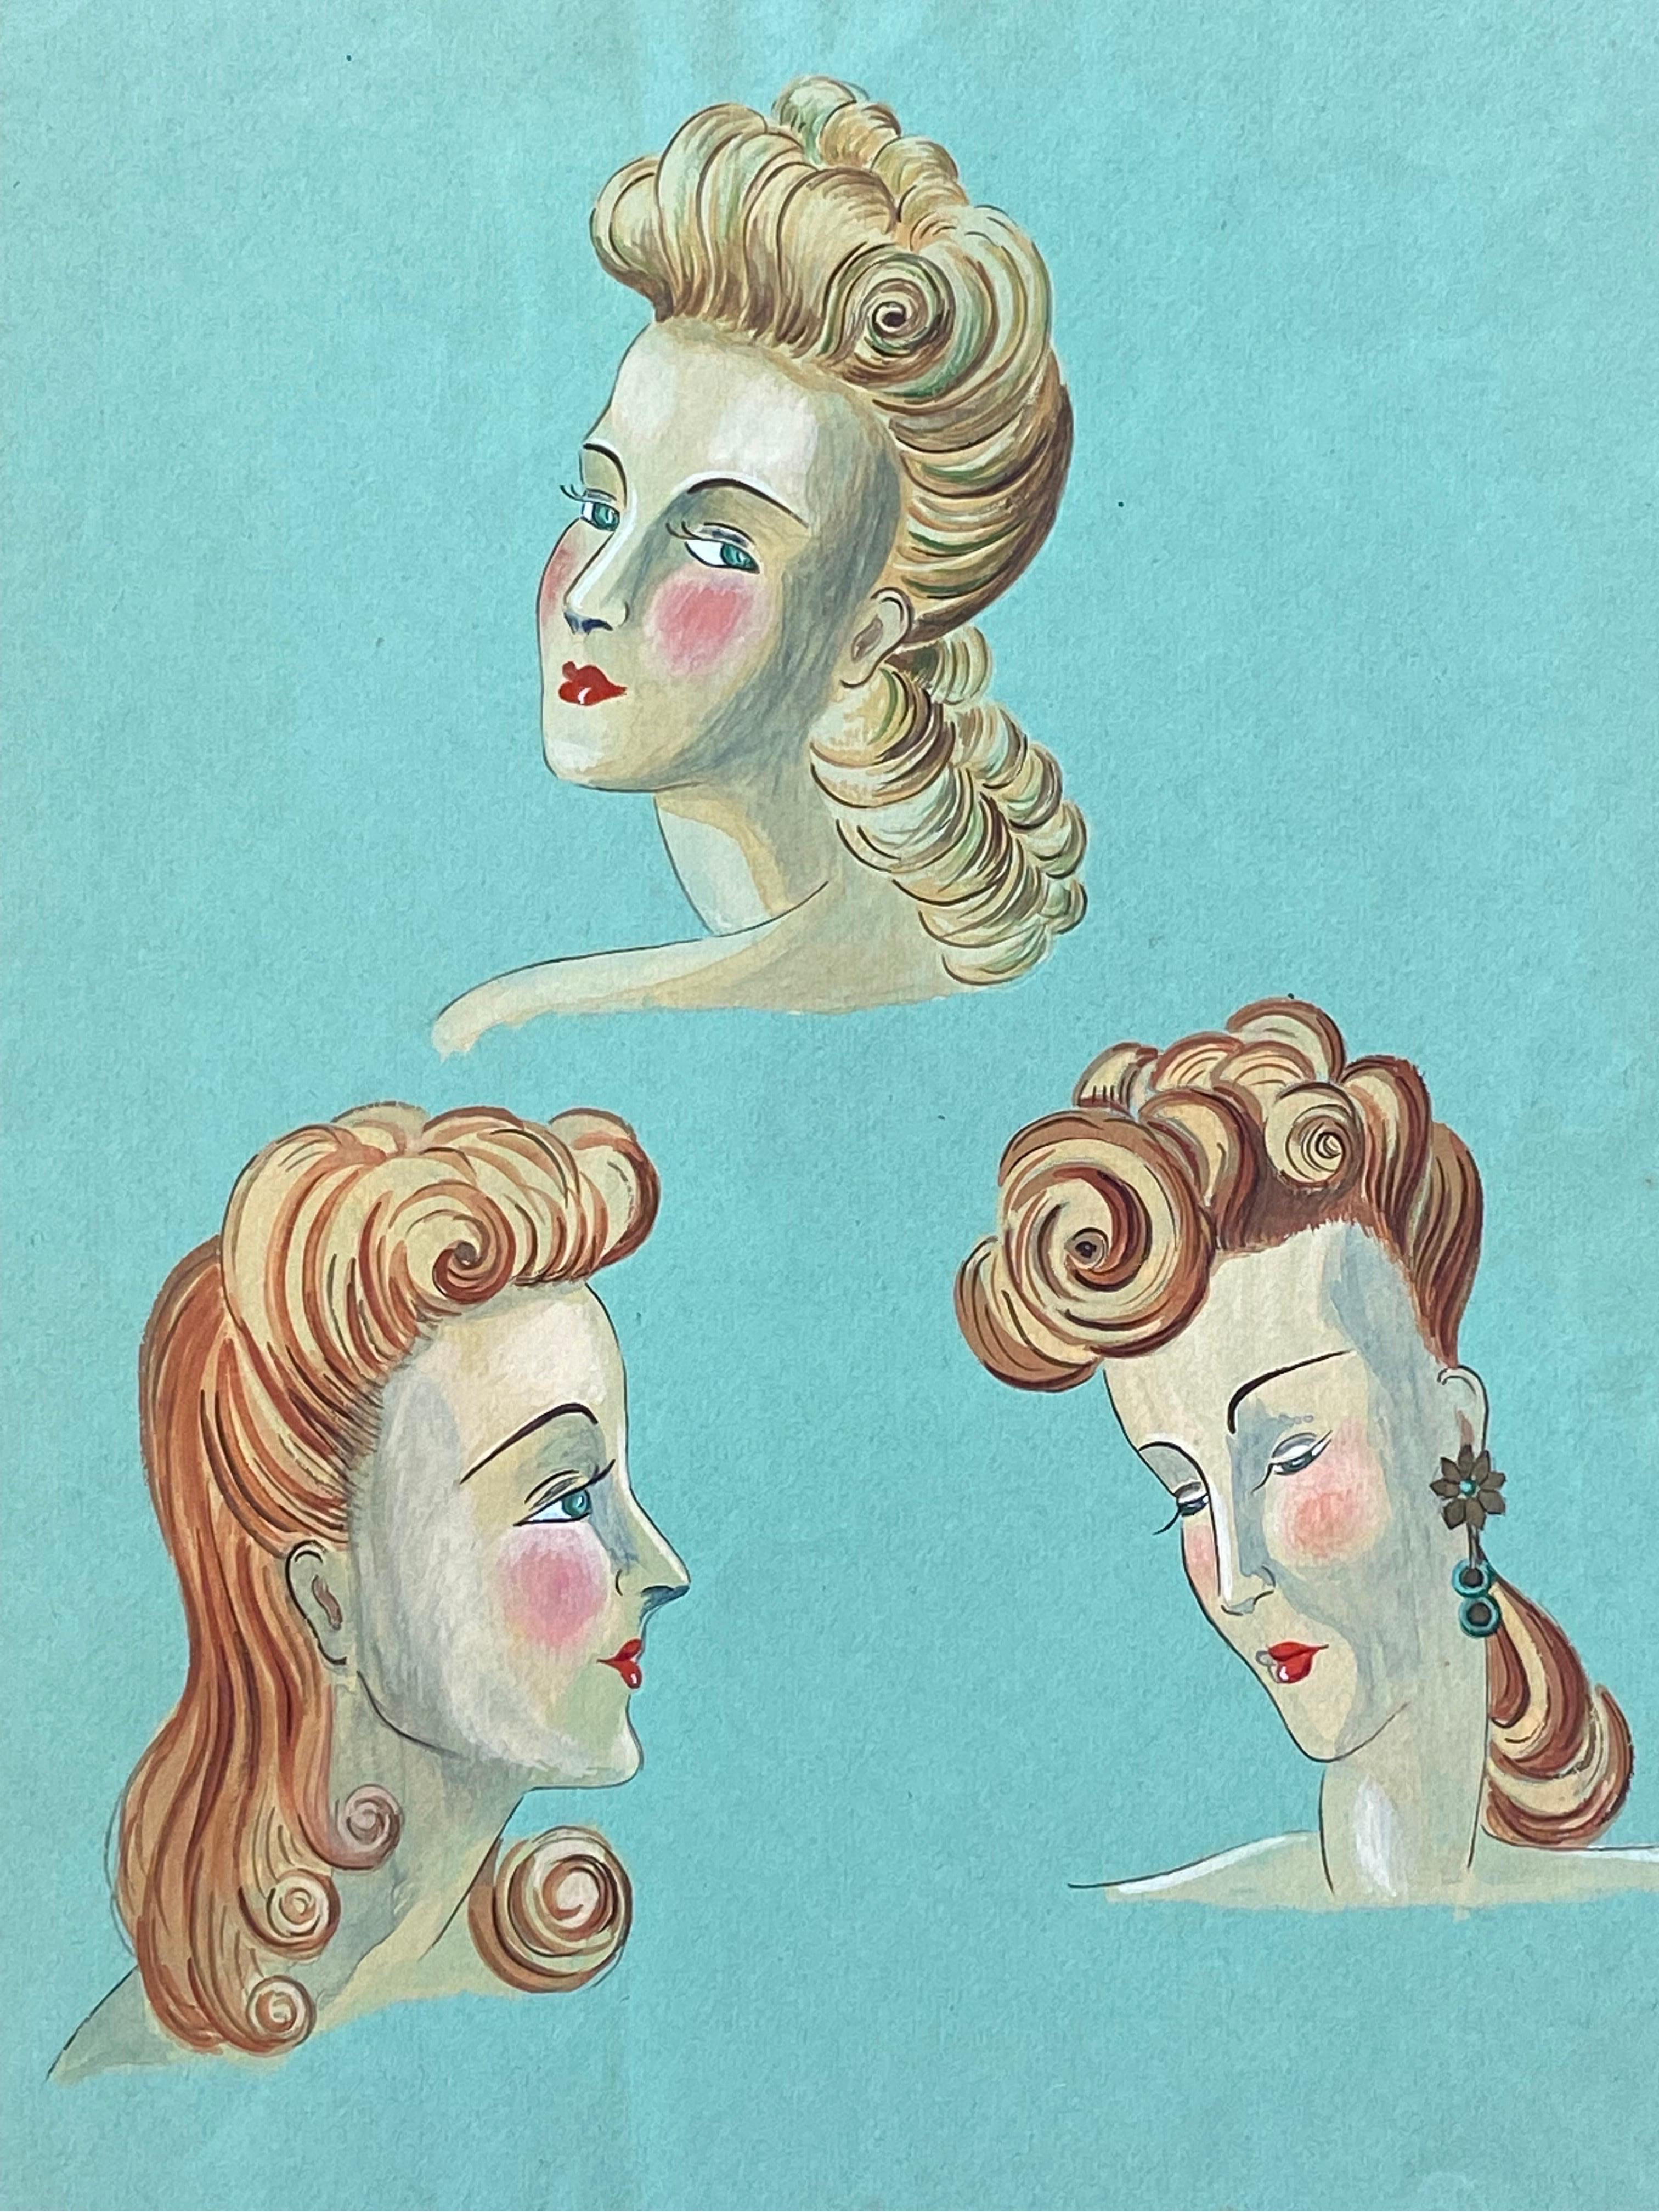 1940's French Fashion Illustration - Elegant Three Women Face Portraits